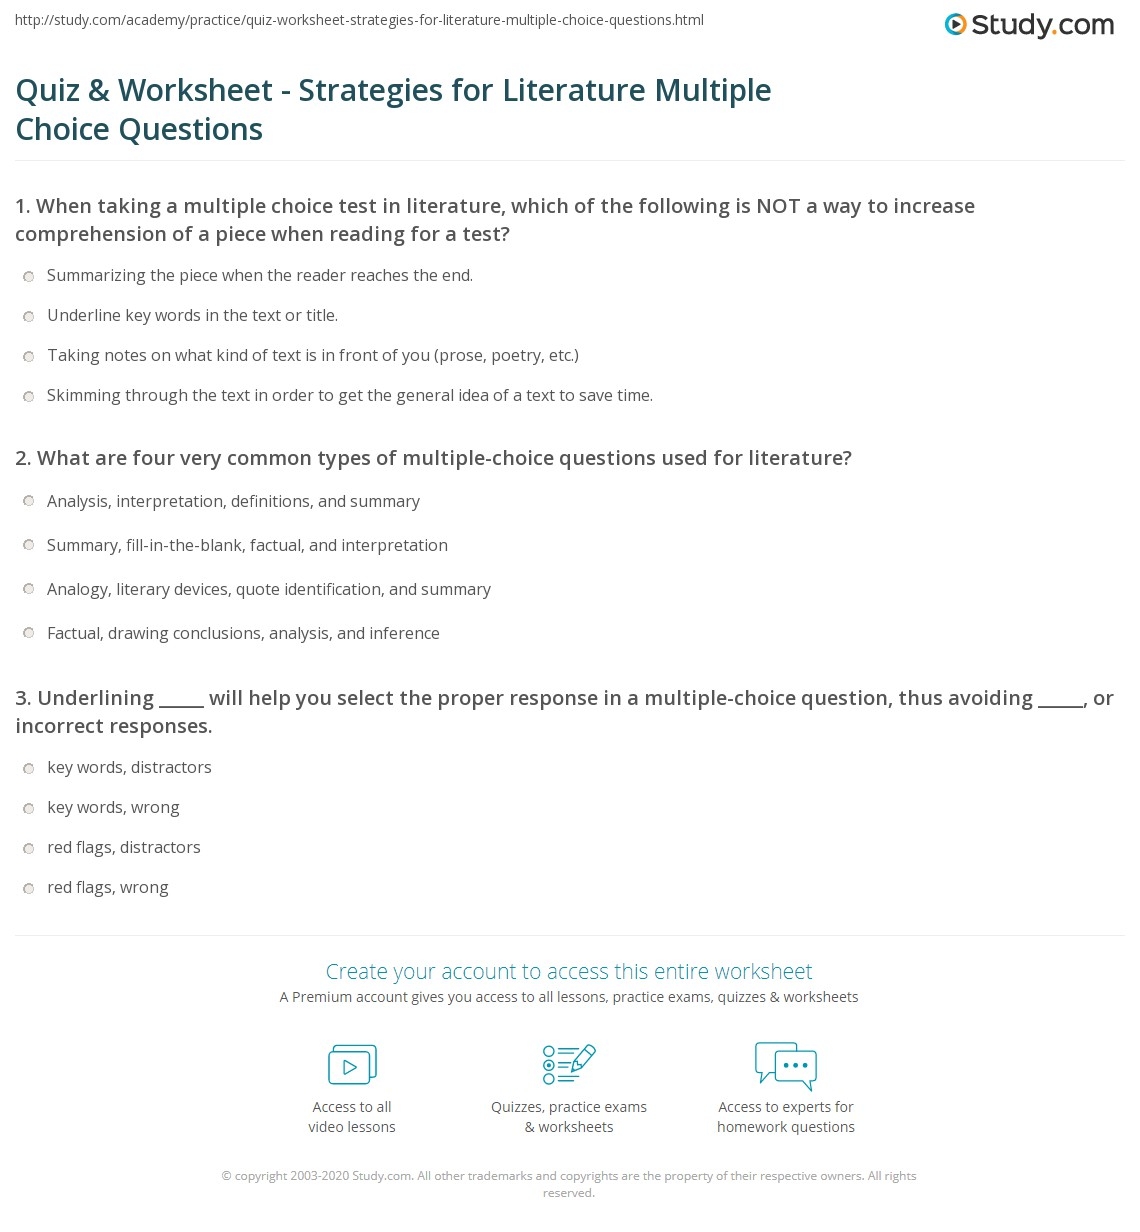 Multiple Choice Test Taking Strategies Worksheets